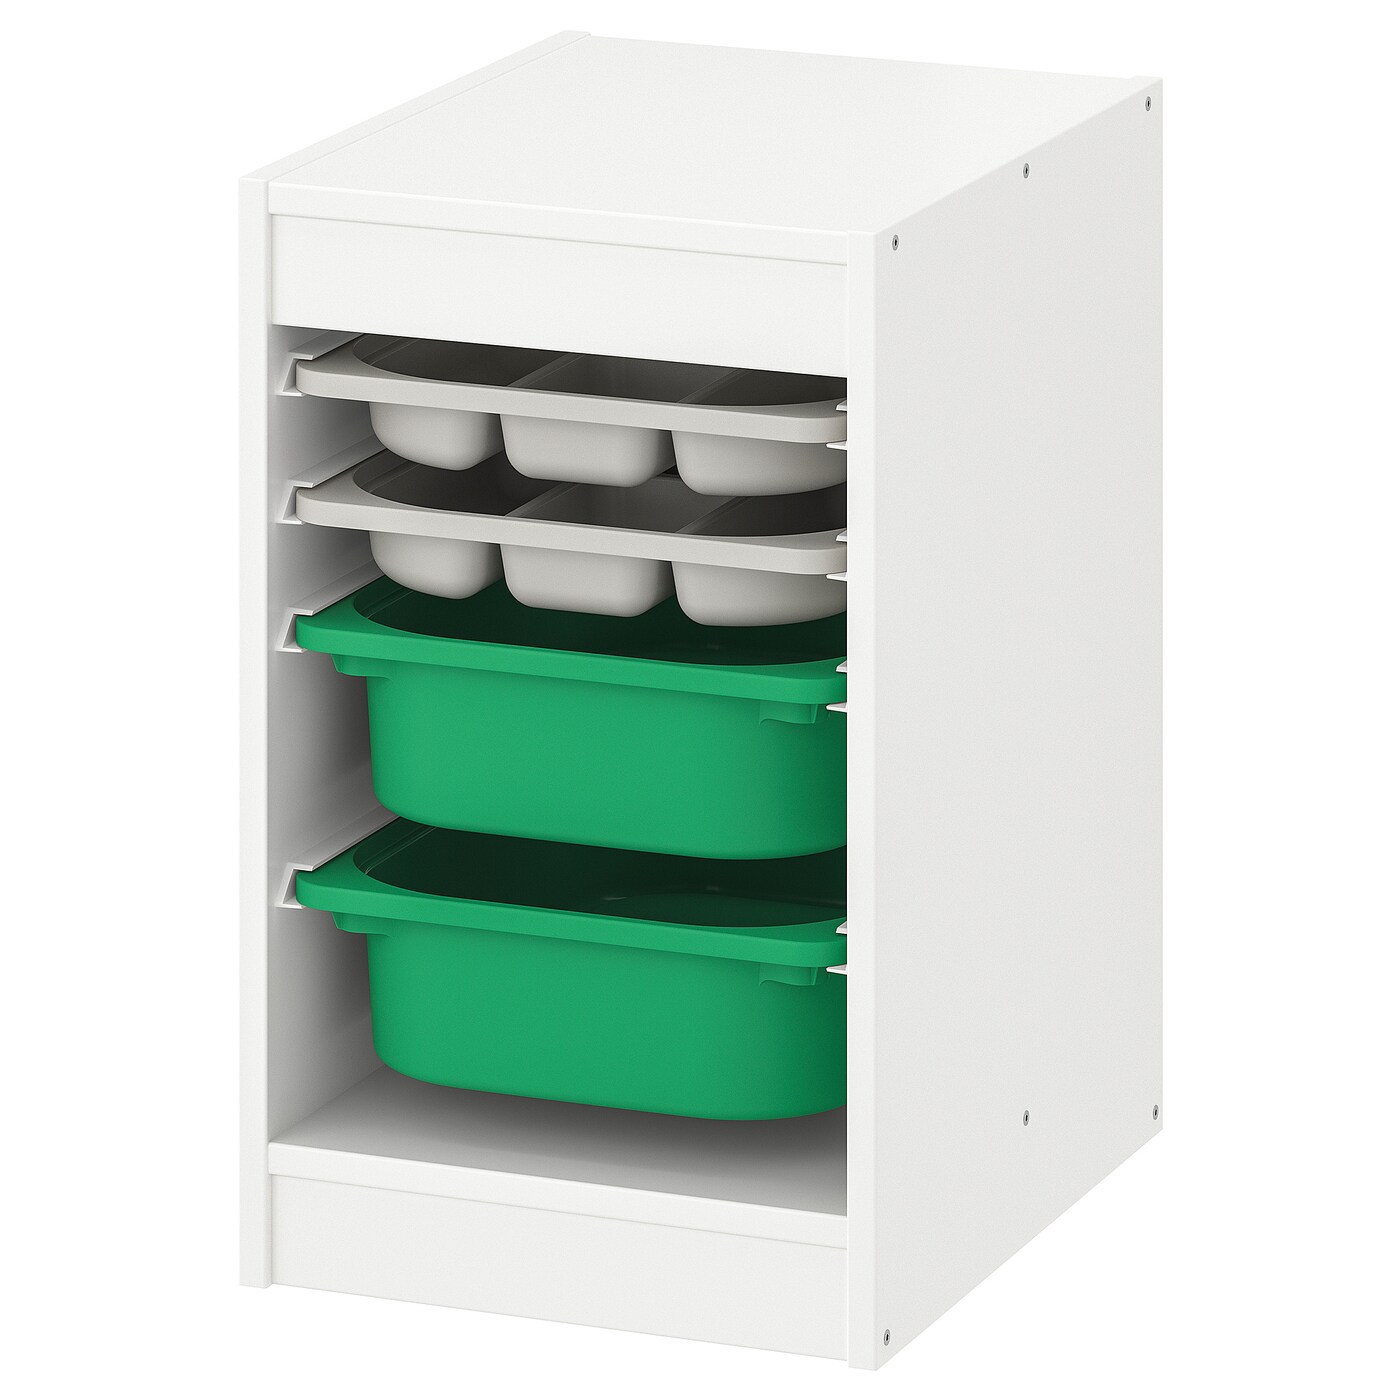 Стеллаж - IKEA TROFAST, 34х44х56 см, белый/зеленый/бело-серый, ТРУФАСТ ИКЕА